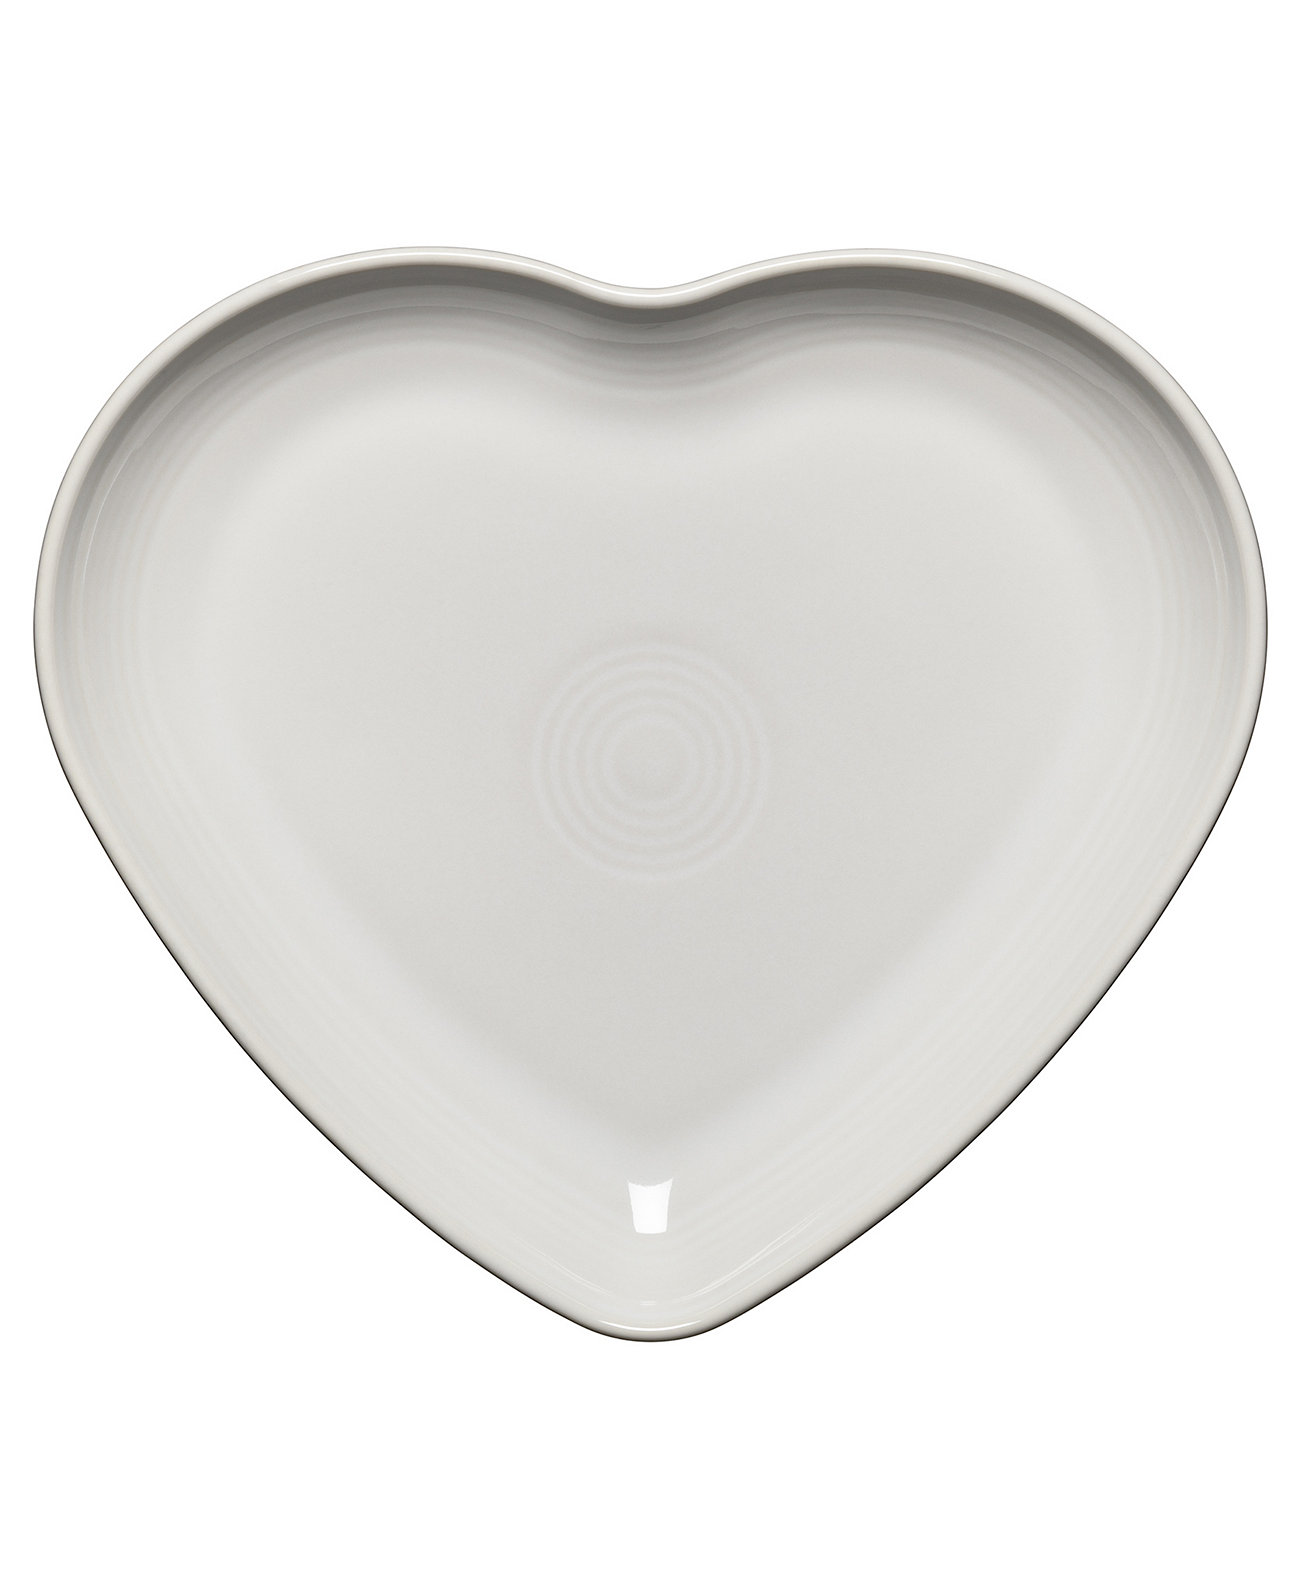 Тарелка в форме сердца 9 дюймов FIESTA